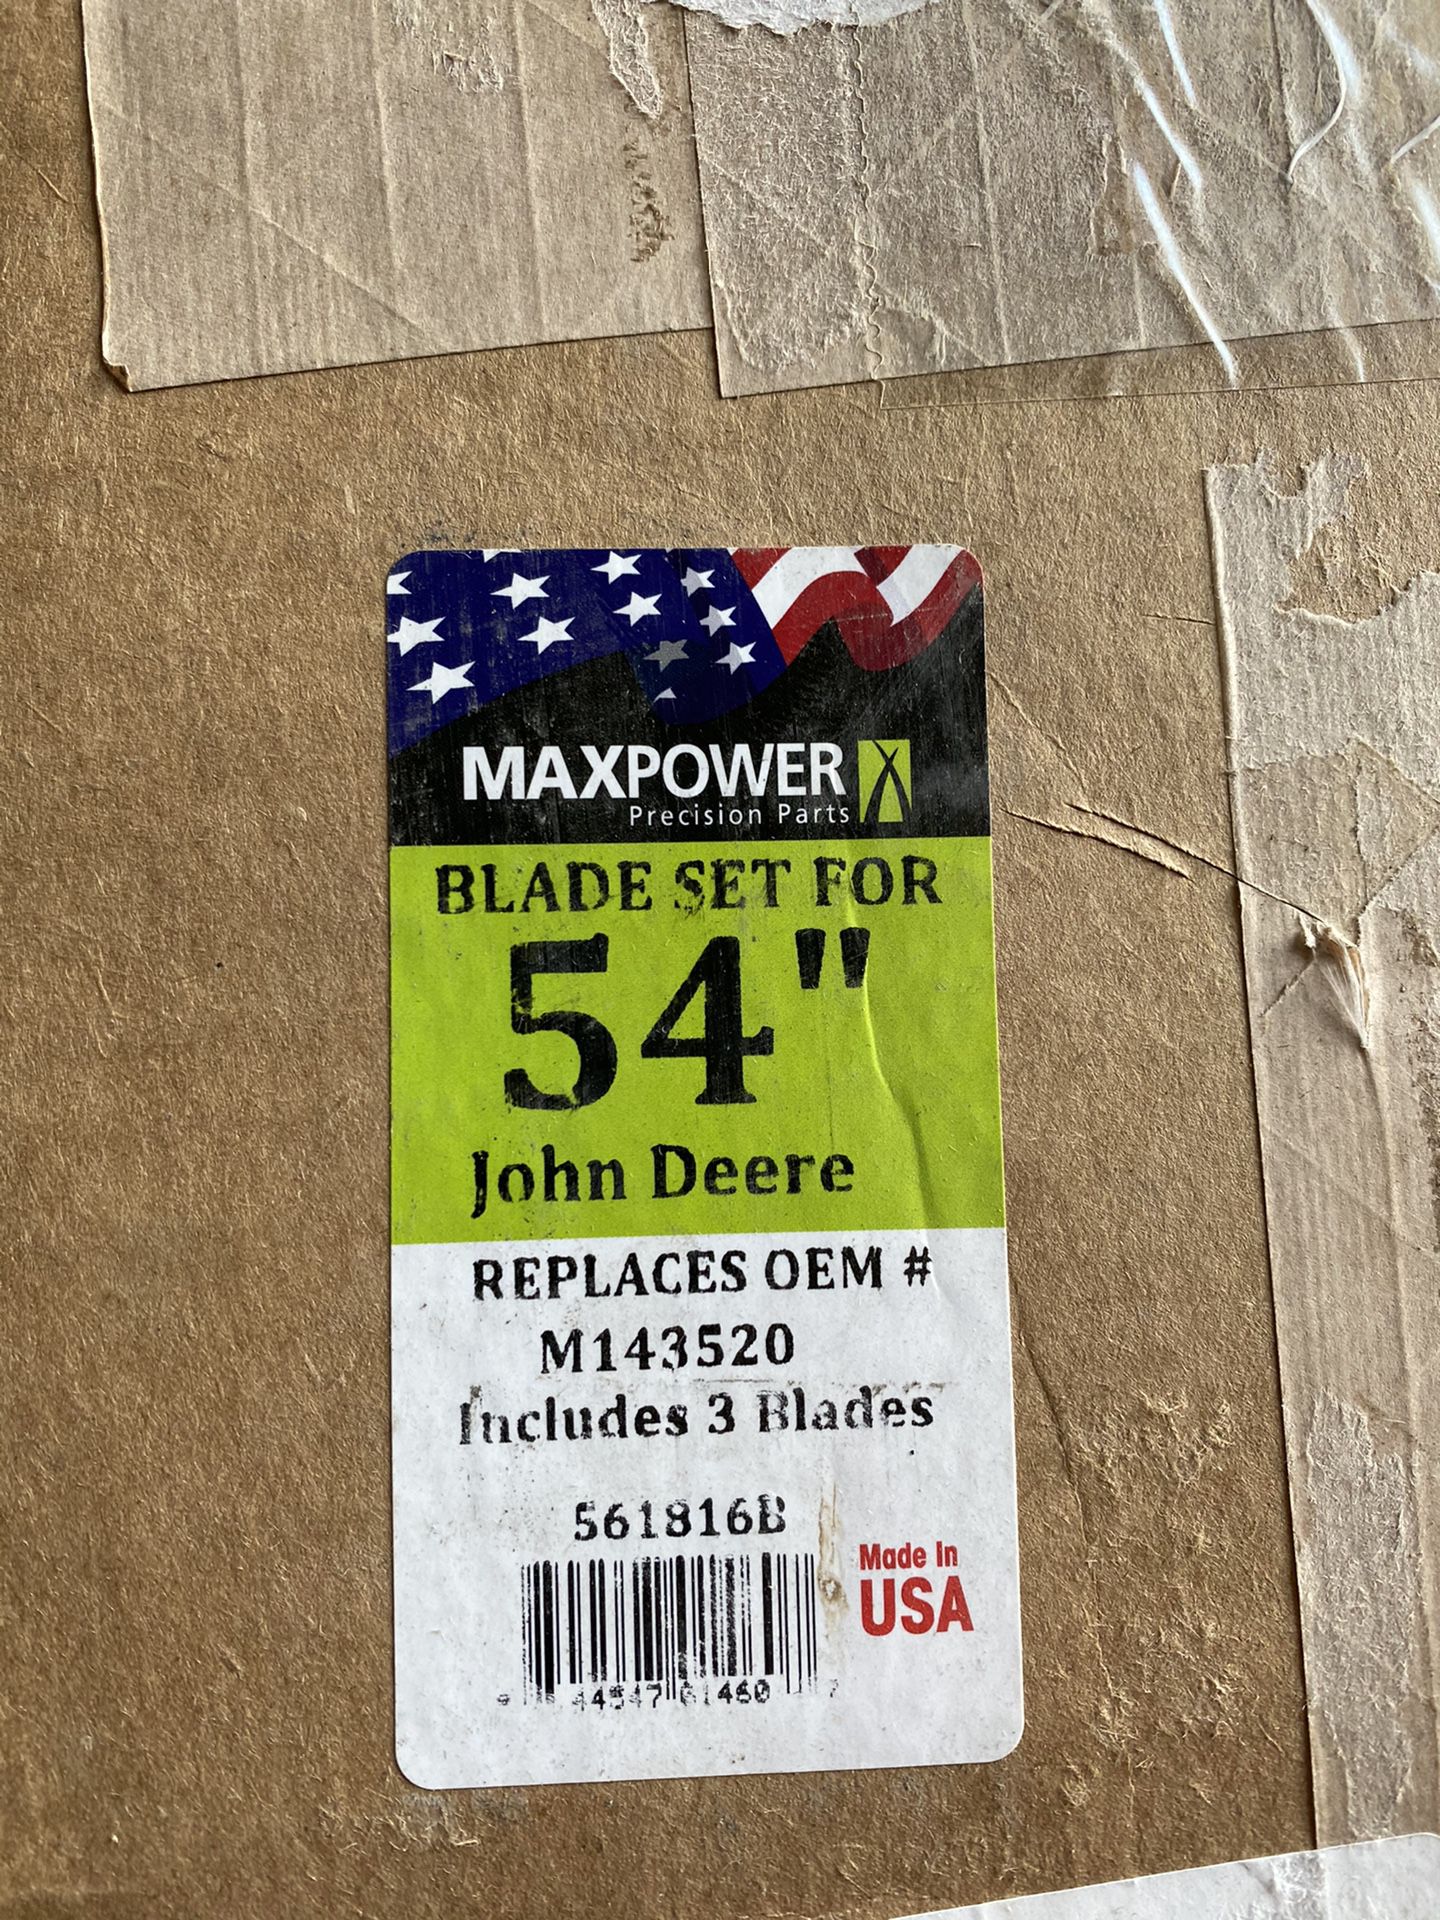 Max Power Blade Set For 54 Inch John Deere—Replaces OEM M143520